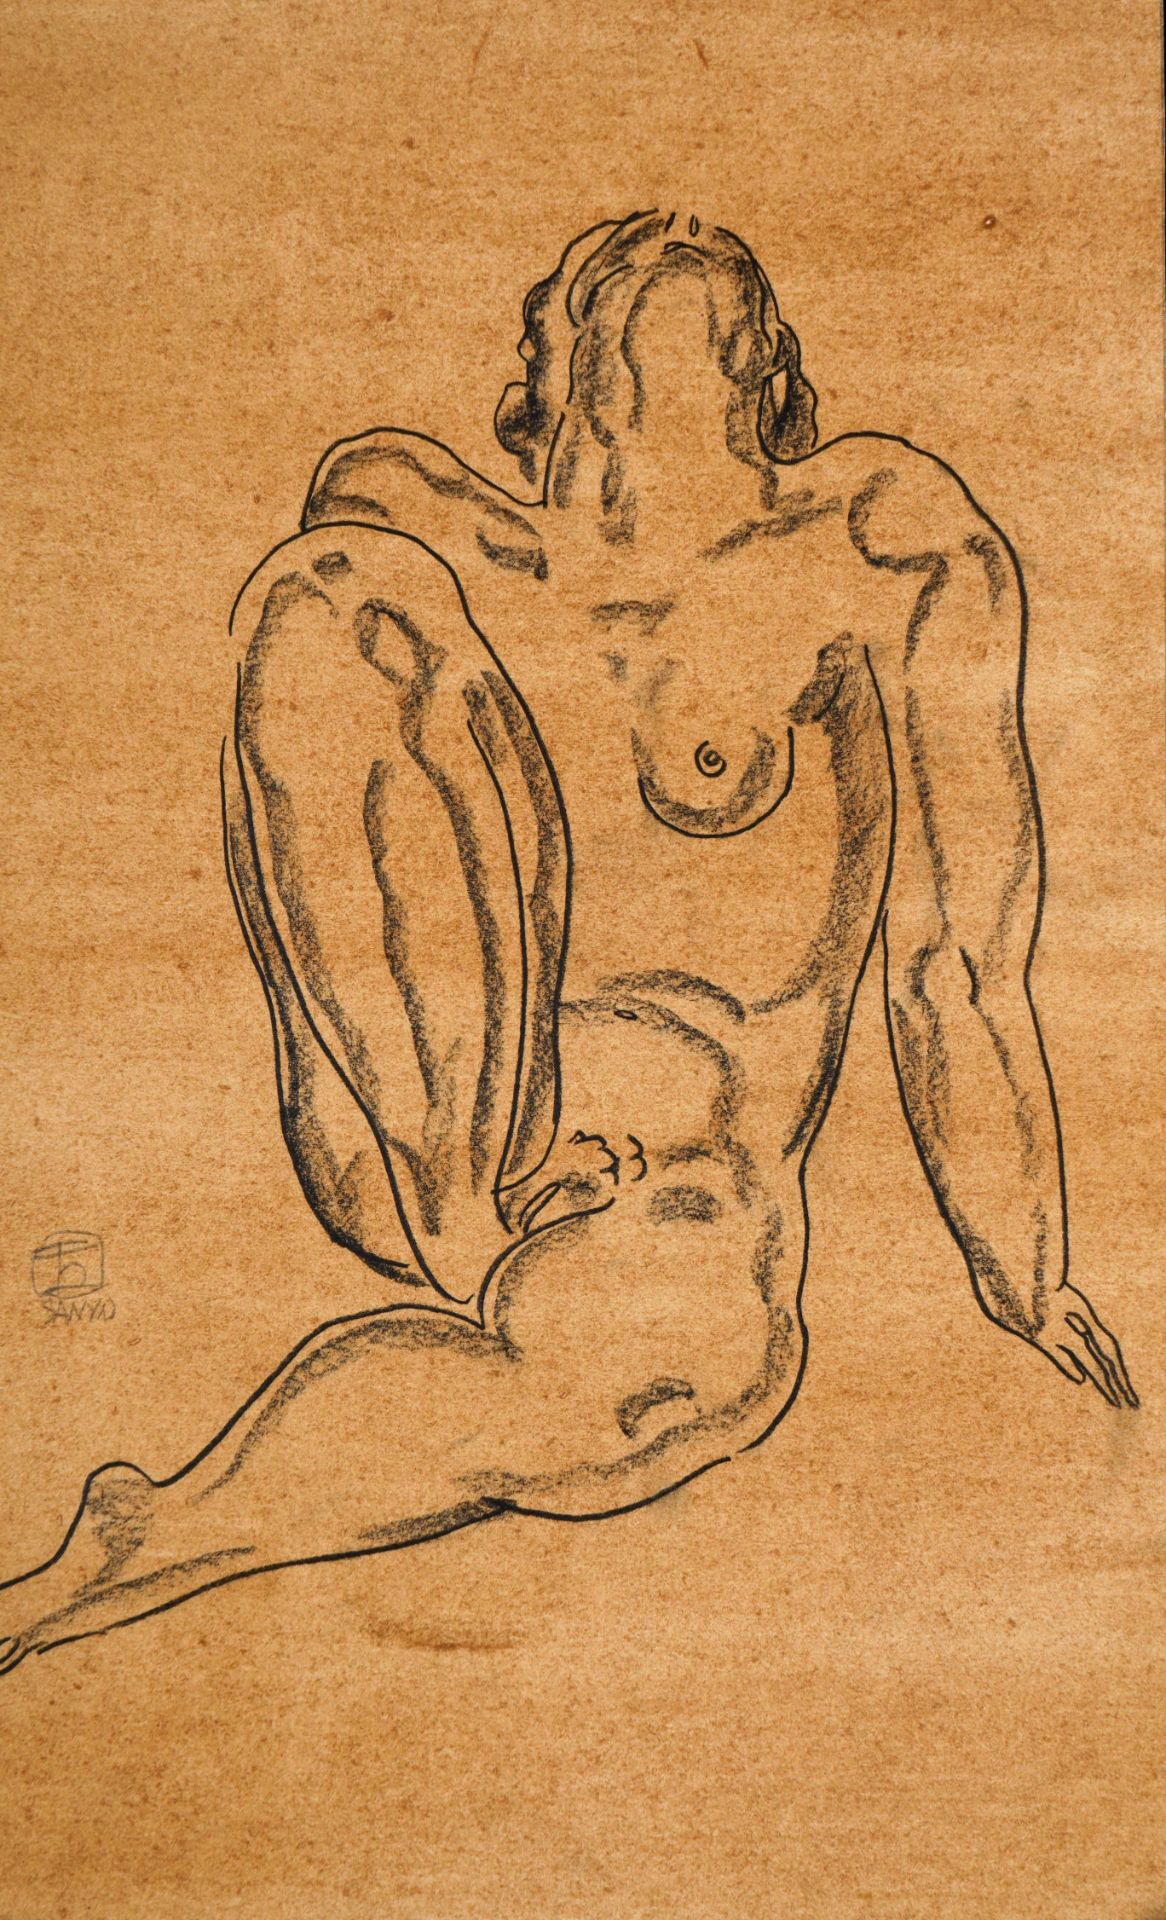 Sanyu (1895-1966), Sketch on Paper